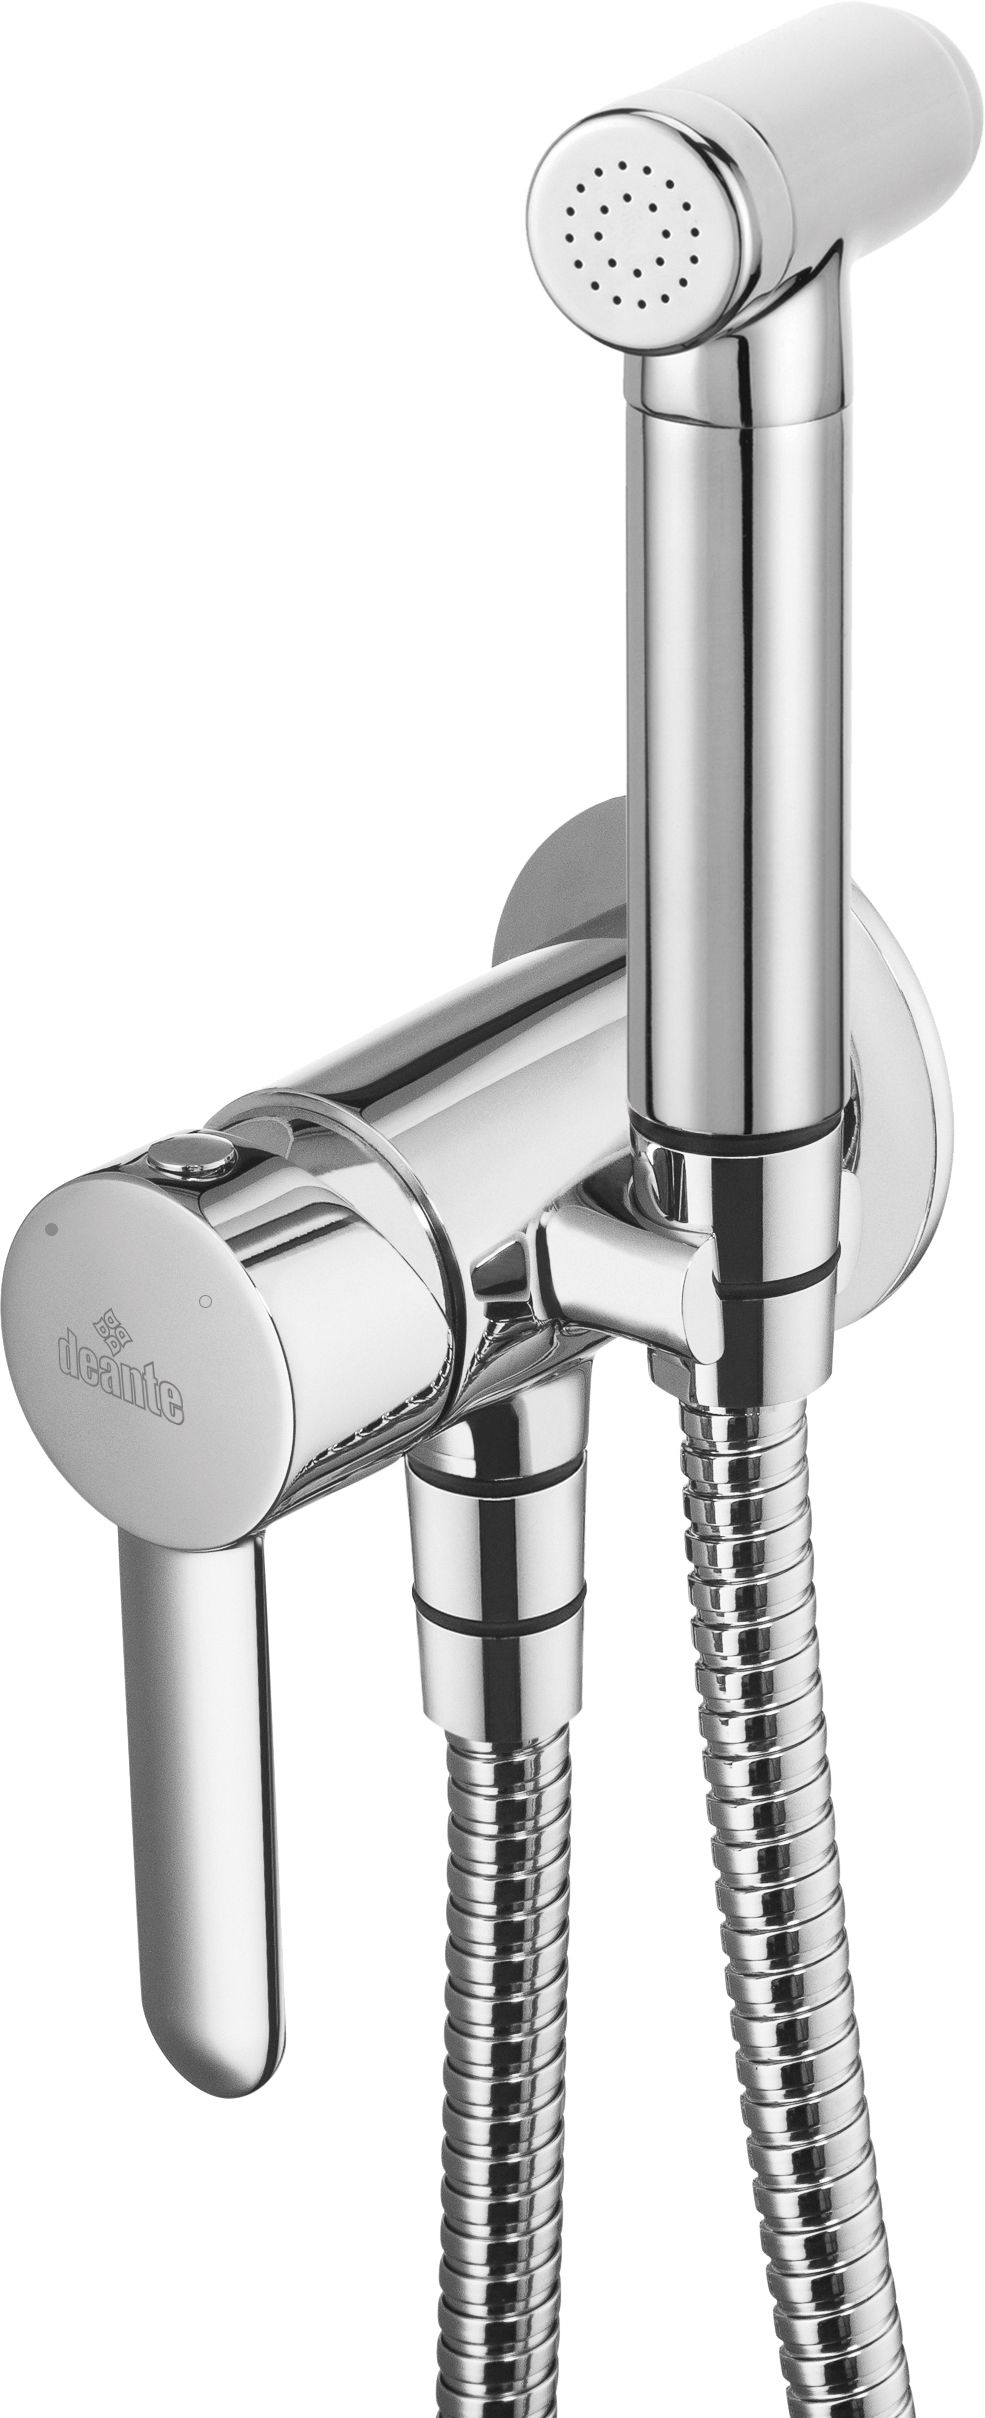 Bidet tap, concealed, with bidetta hand shower - BGK_034M - Główne zdjęcie produktowe